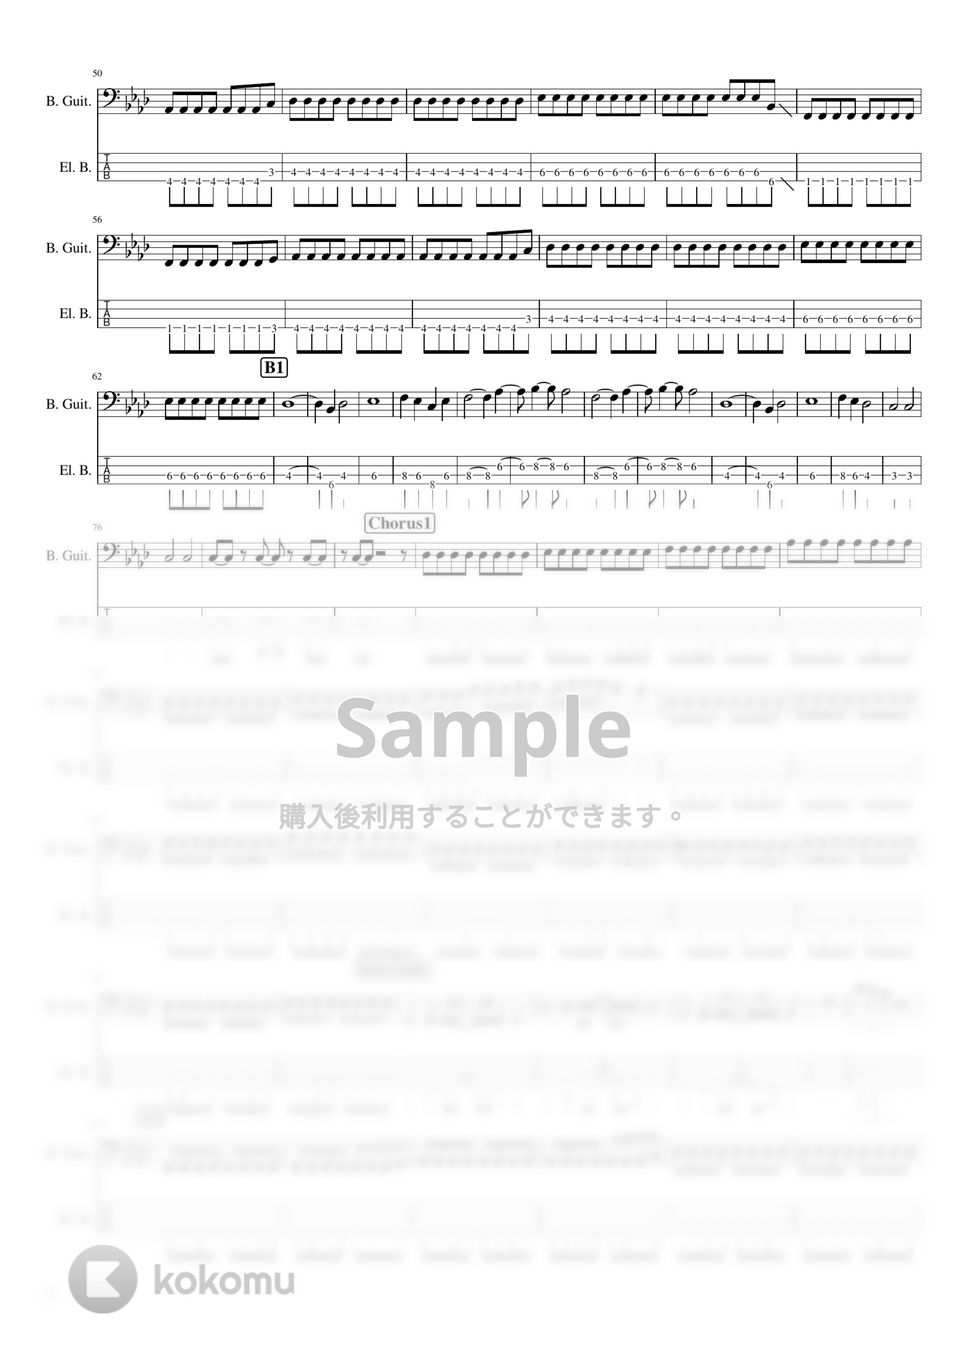 [ALEXANDROS] - 閃光 (ベース / TAB / スコア) by TARUO's_Bass_Score